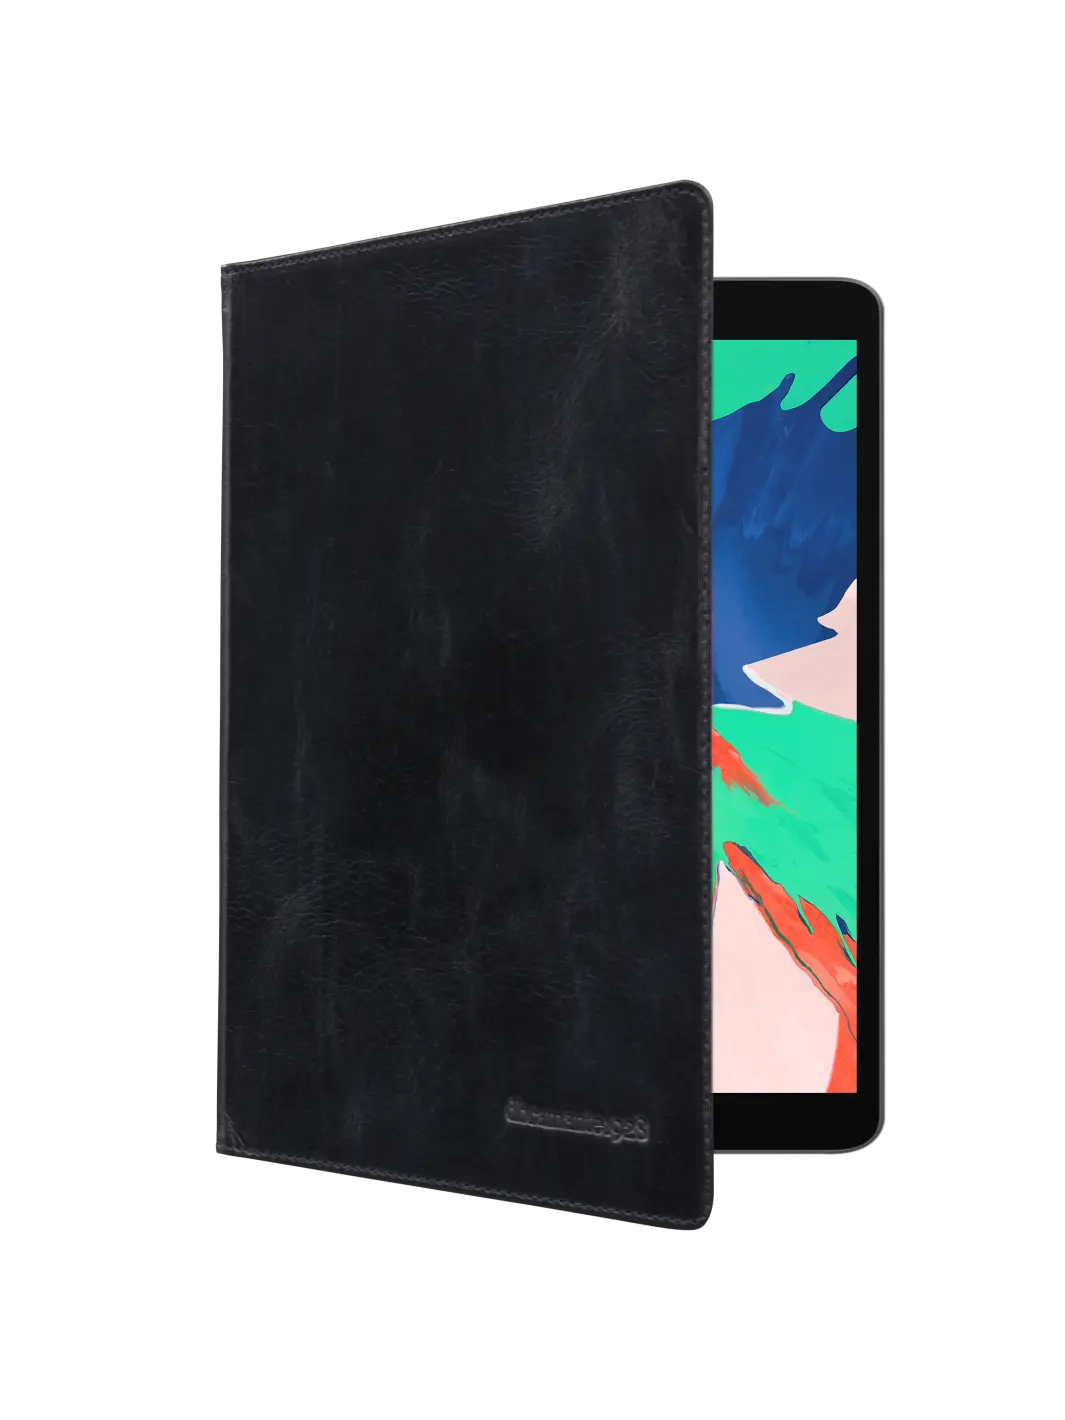 Copenhagen tablet cases Black iPad Air 10.5" Pro 10.5" iPad Cases